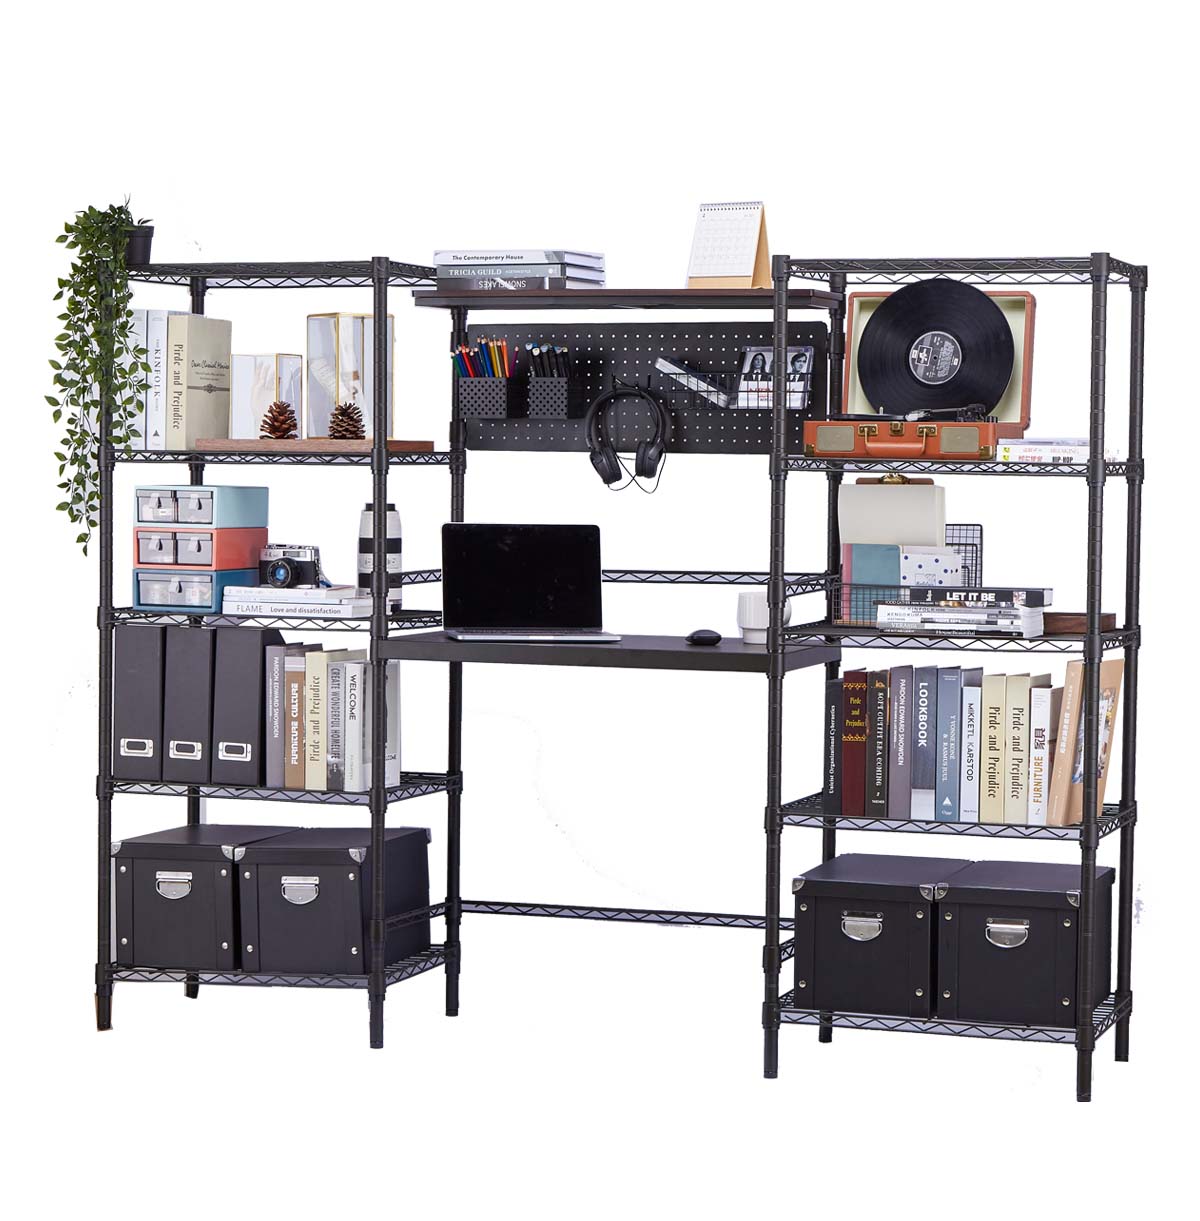 12-Tier Bookshelf / Workstation Computer Desk With Wire Storage Shelves / Home Office PC Laptop Table Study Desk 